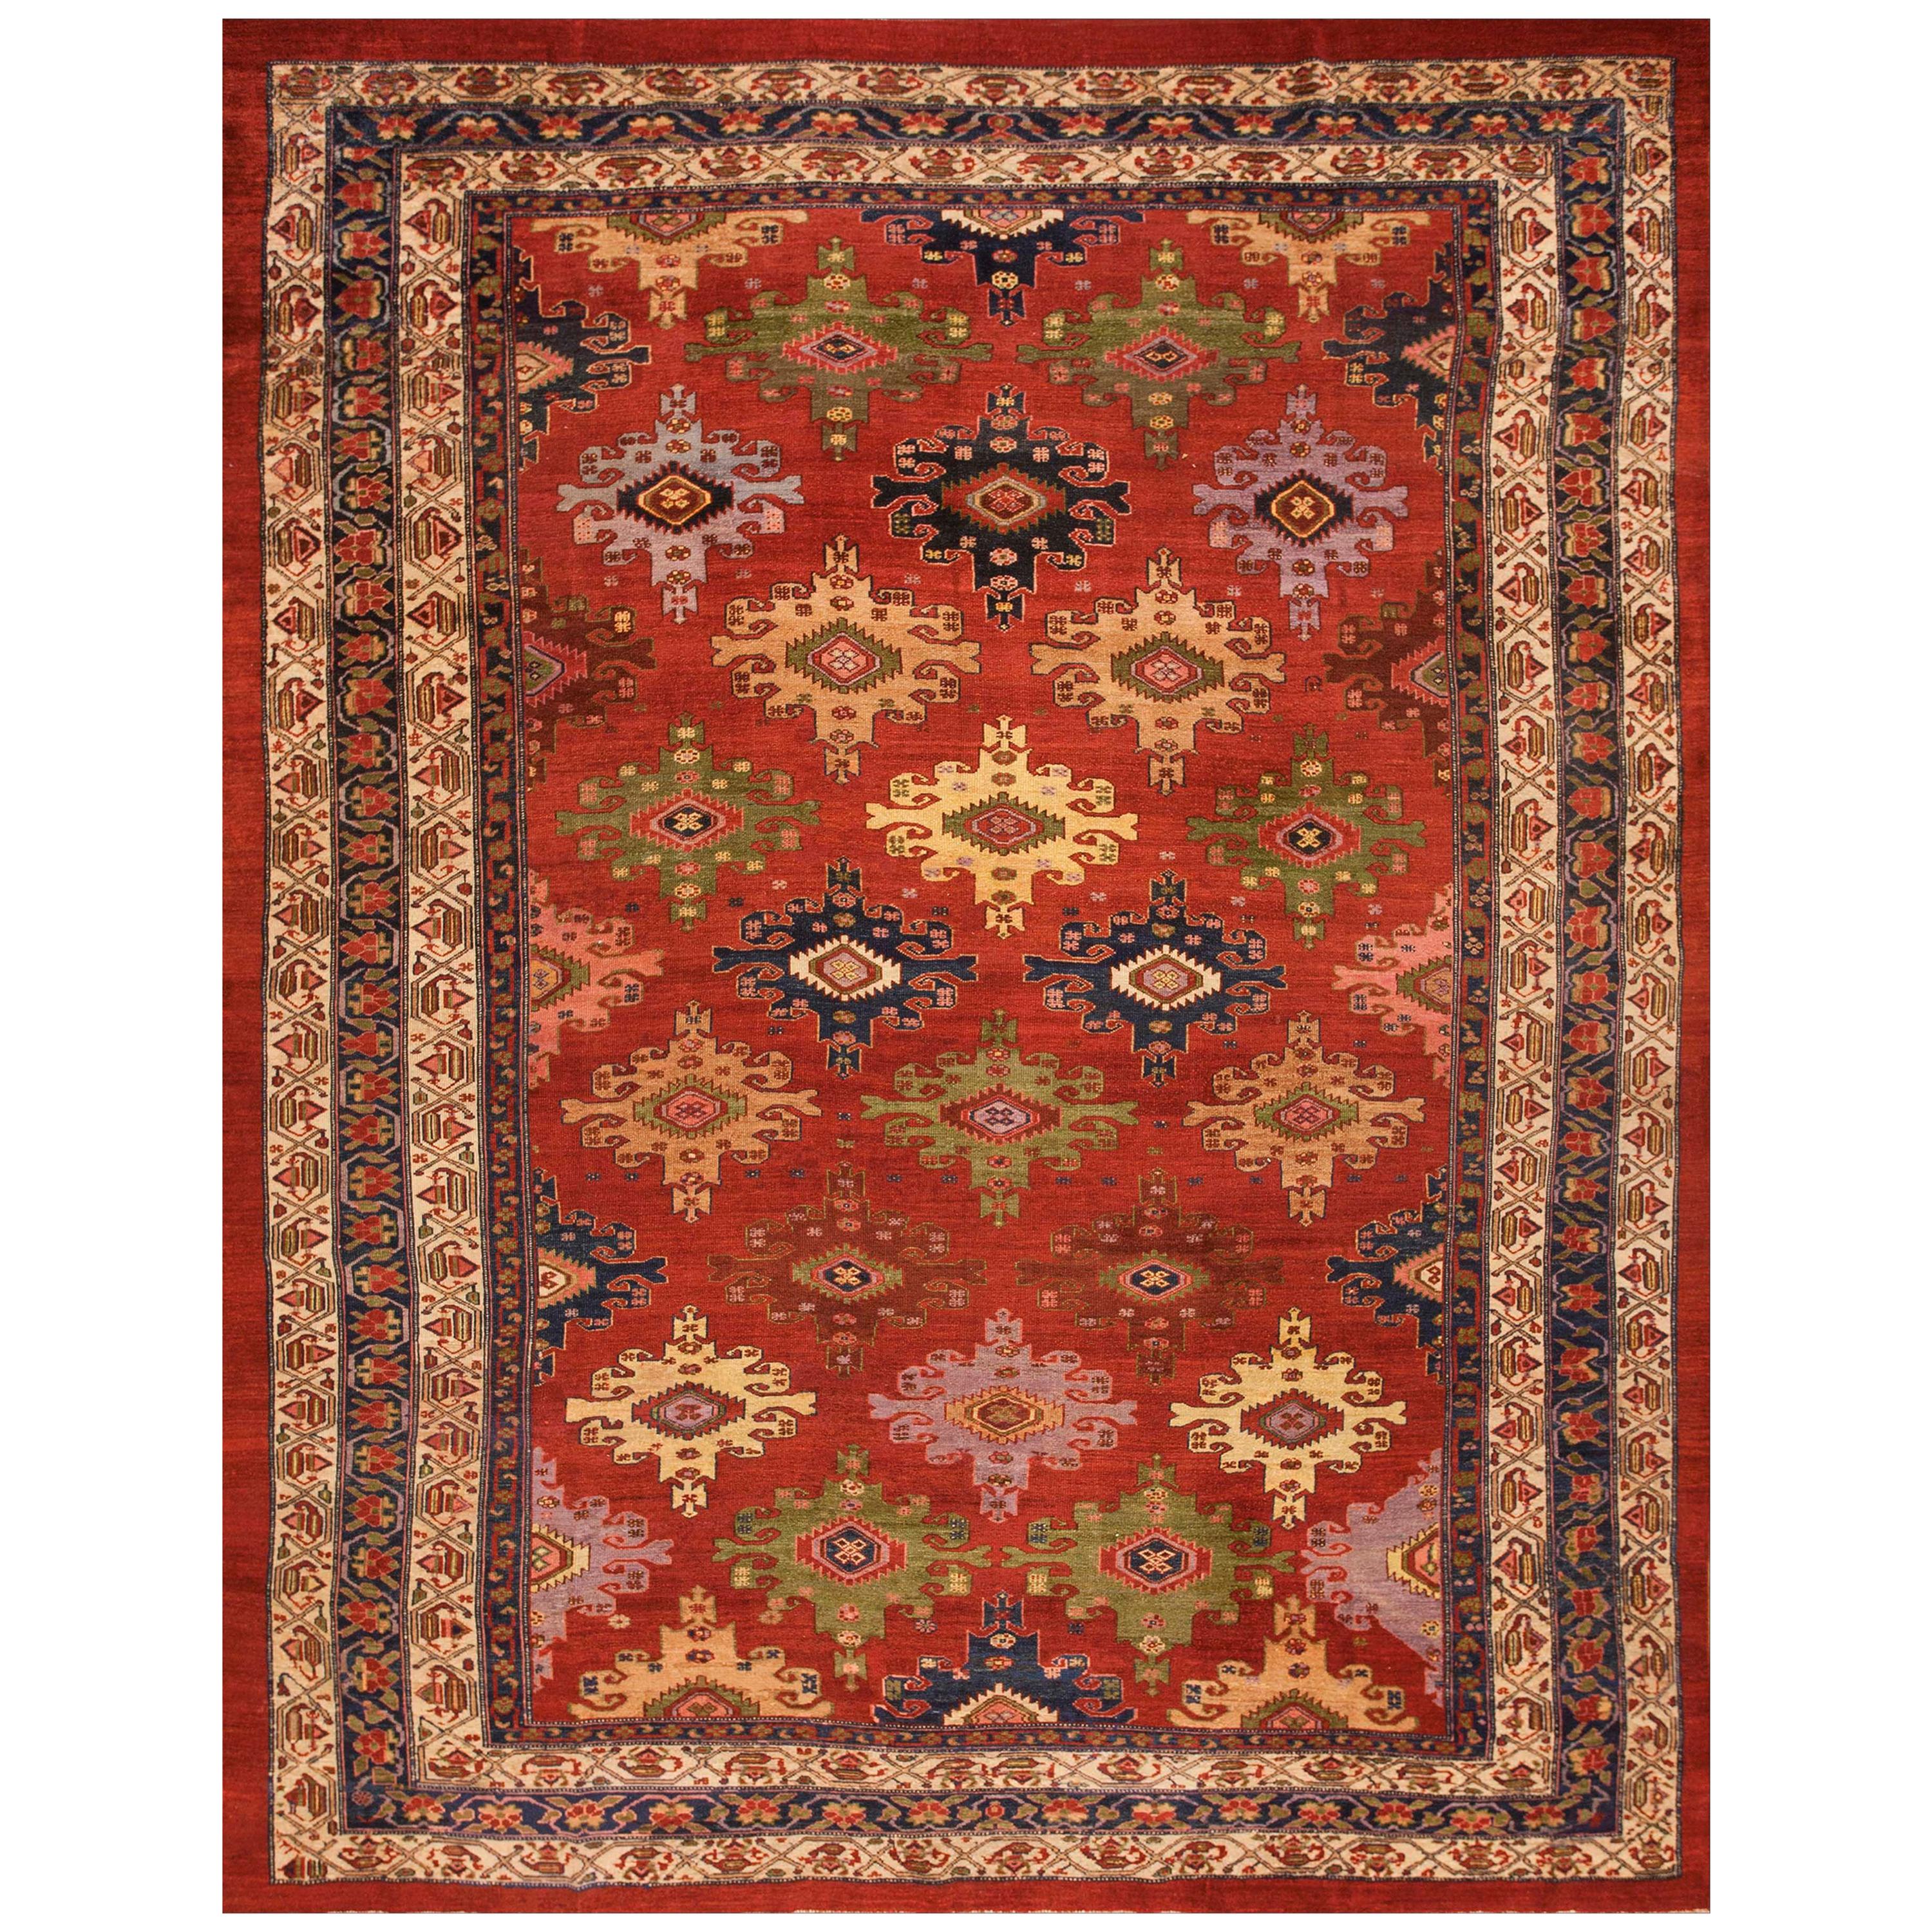 19th Century Persian Malayer Carpet ( 9'4" x 12'4" - 285 x 375 ) For Sale